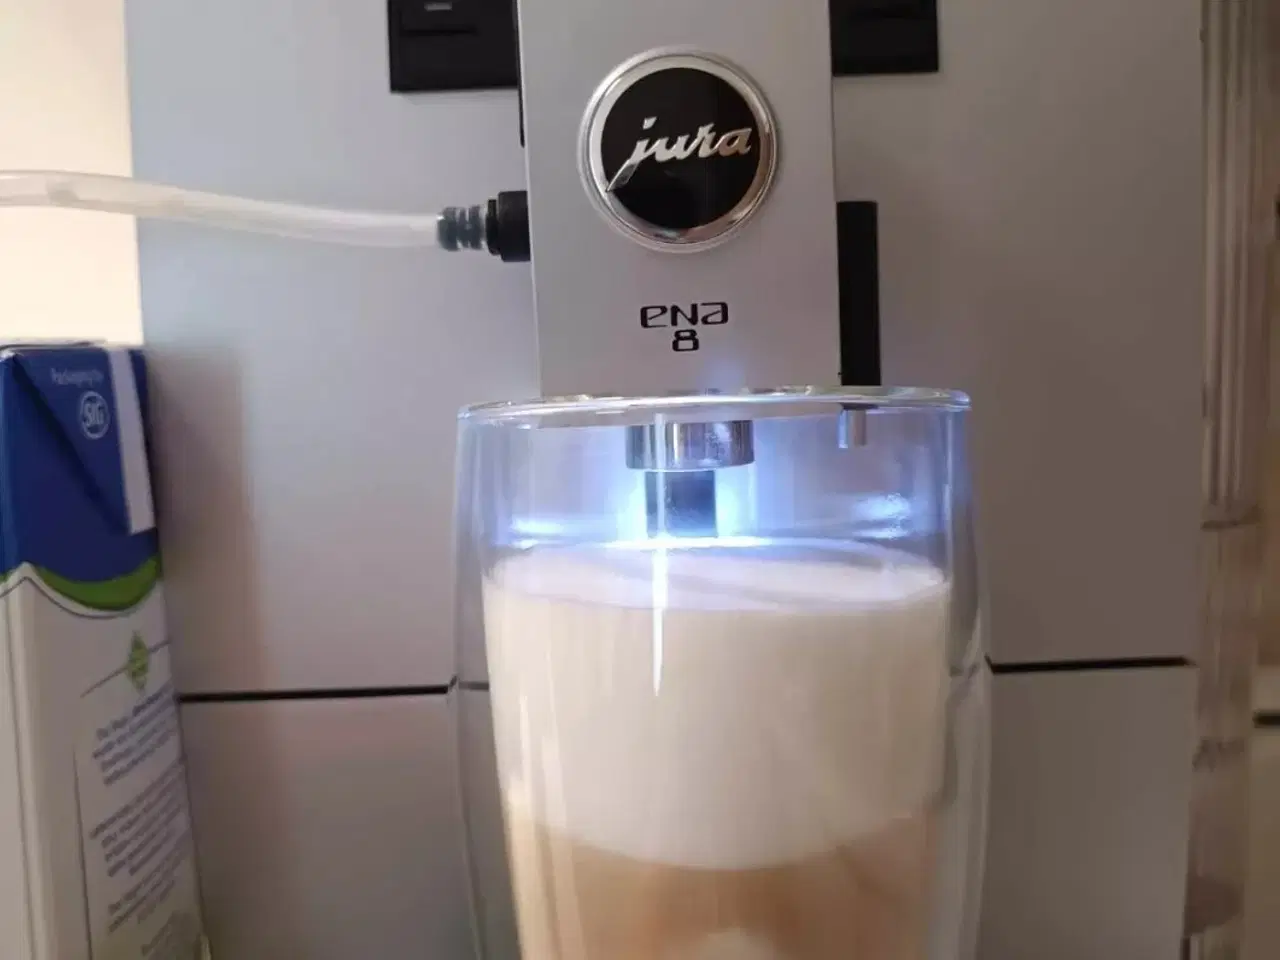 Billede 5 - Jura Ena 8 kaffemaskine